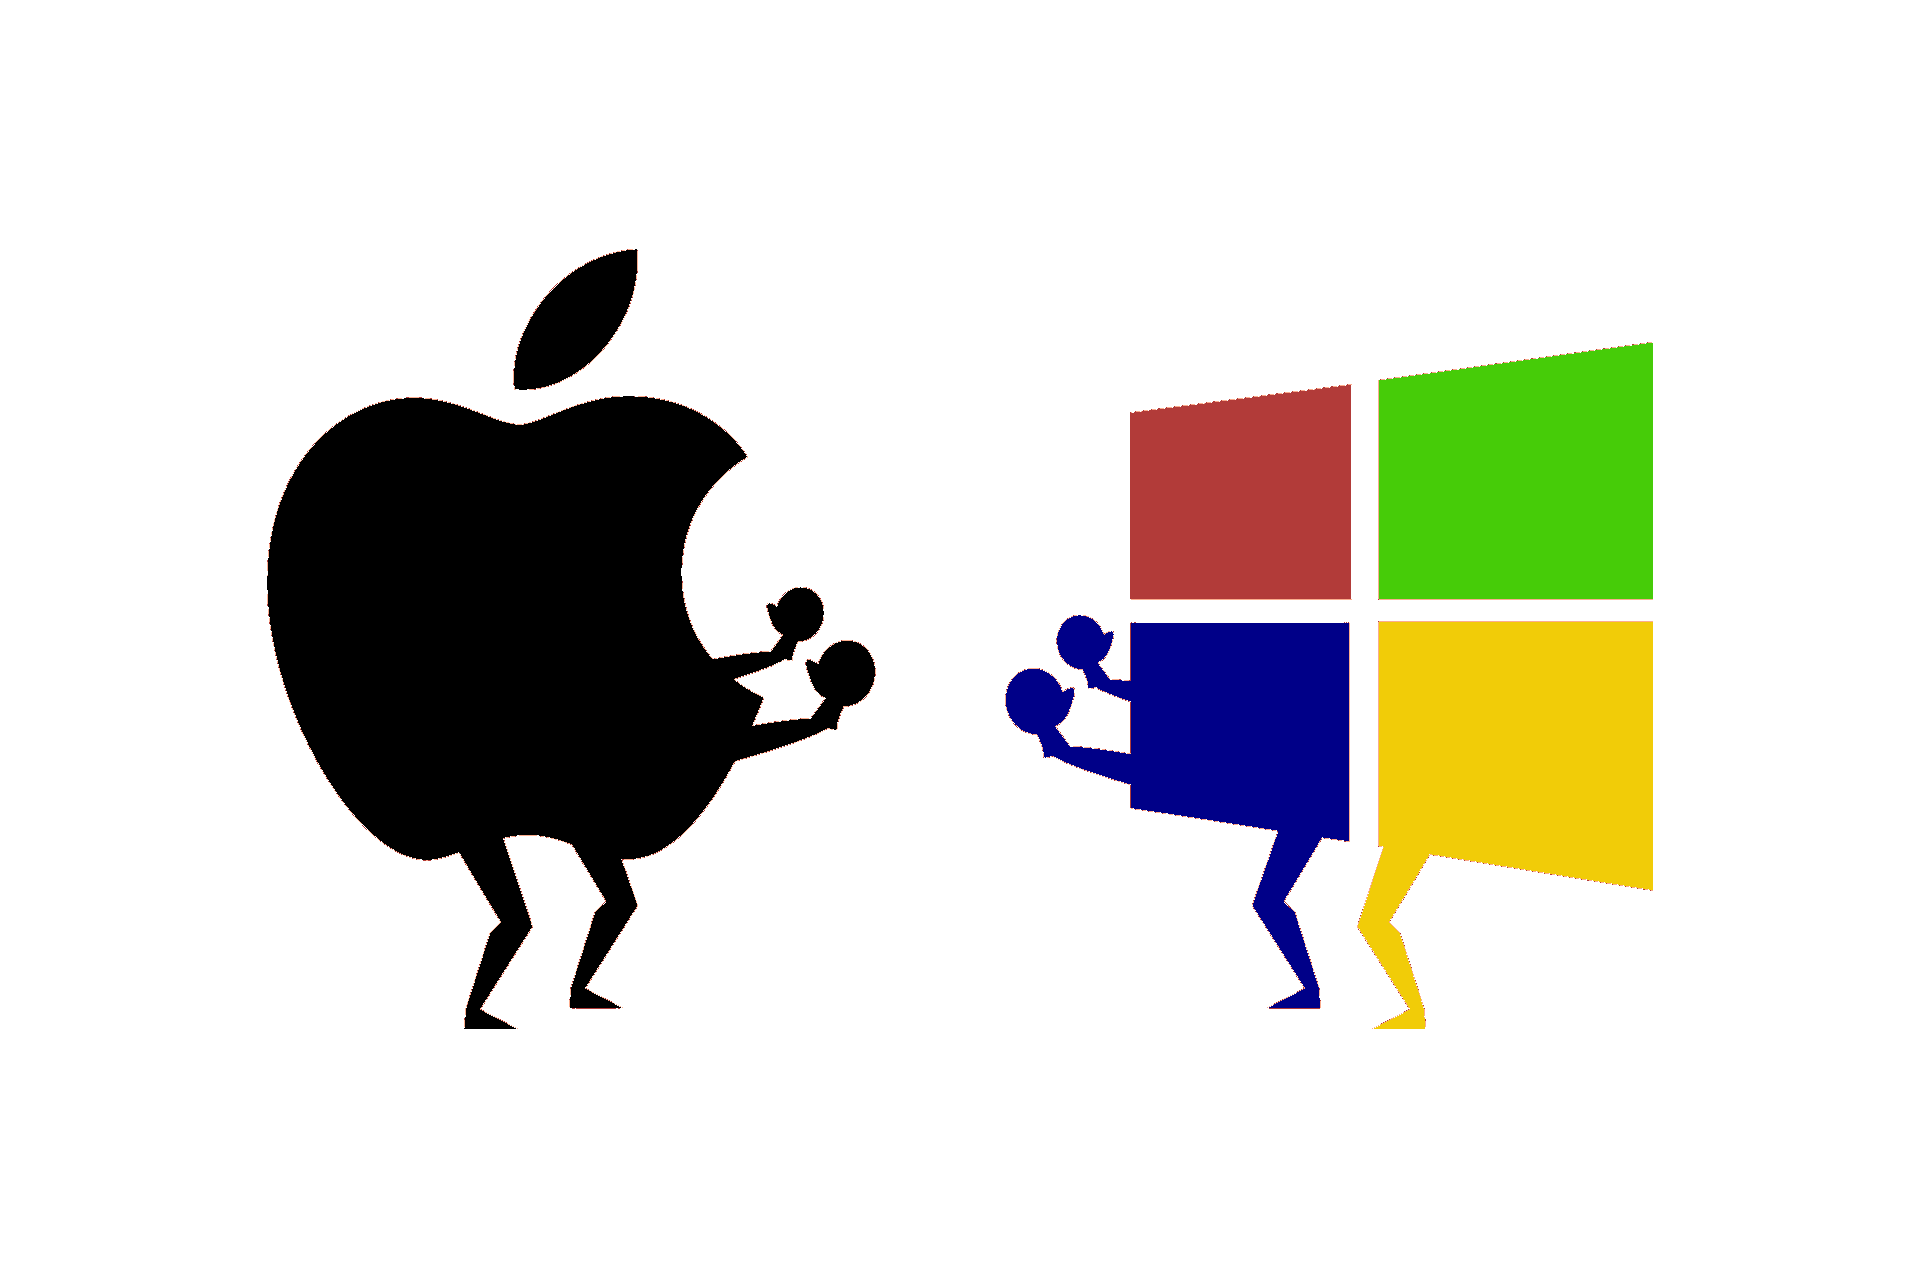 apple vs microsoft case study